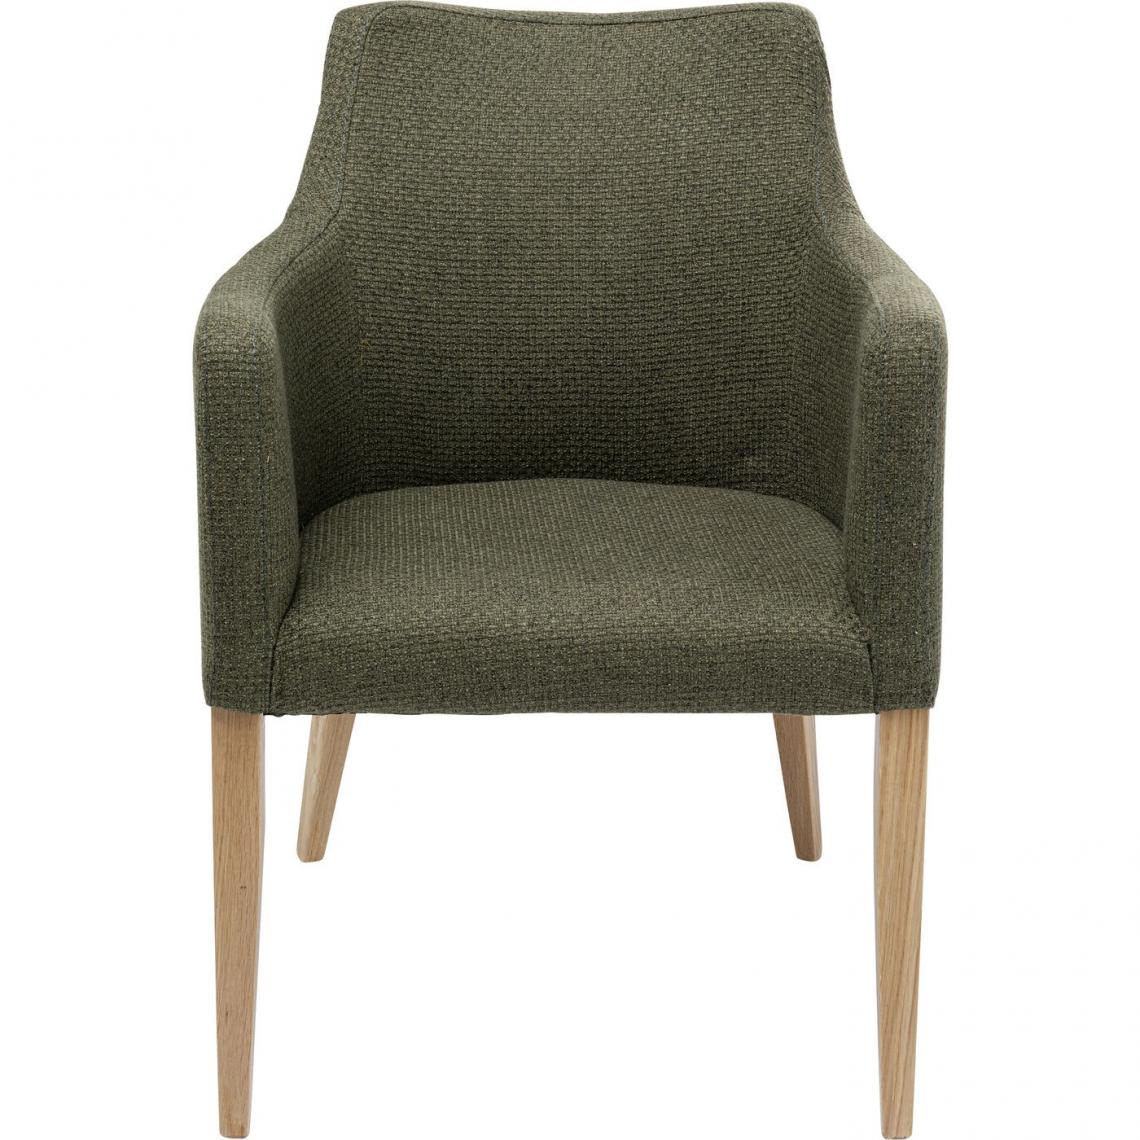 Karedesign - Chaise avec accoudoirs Mode Dolce verte Kare Design - Chaises